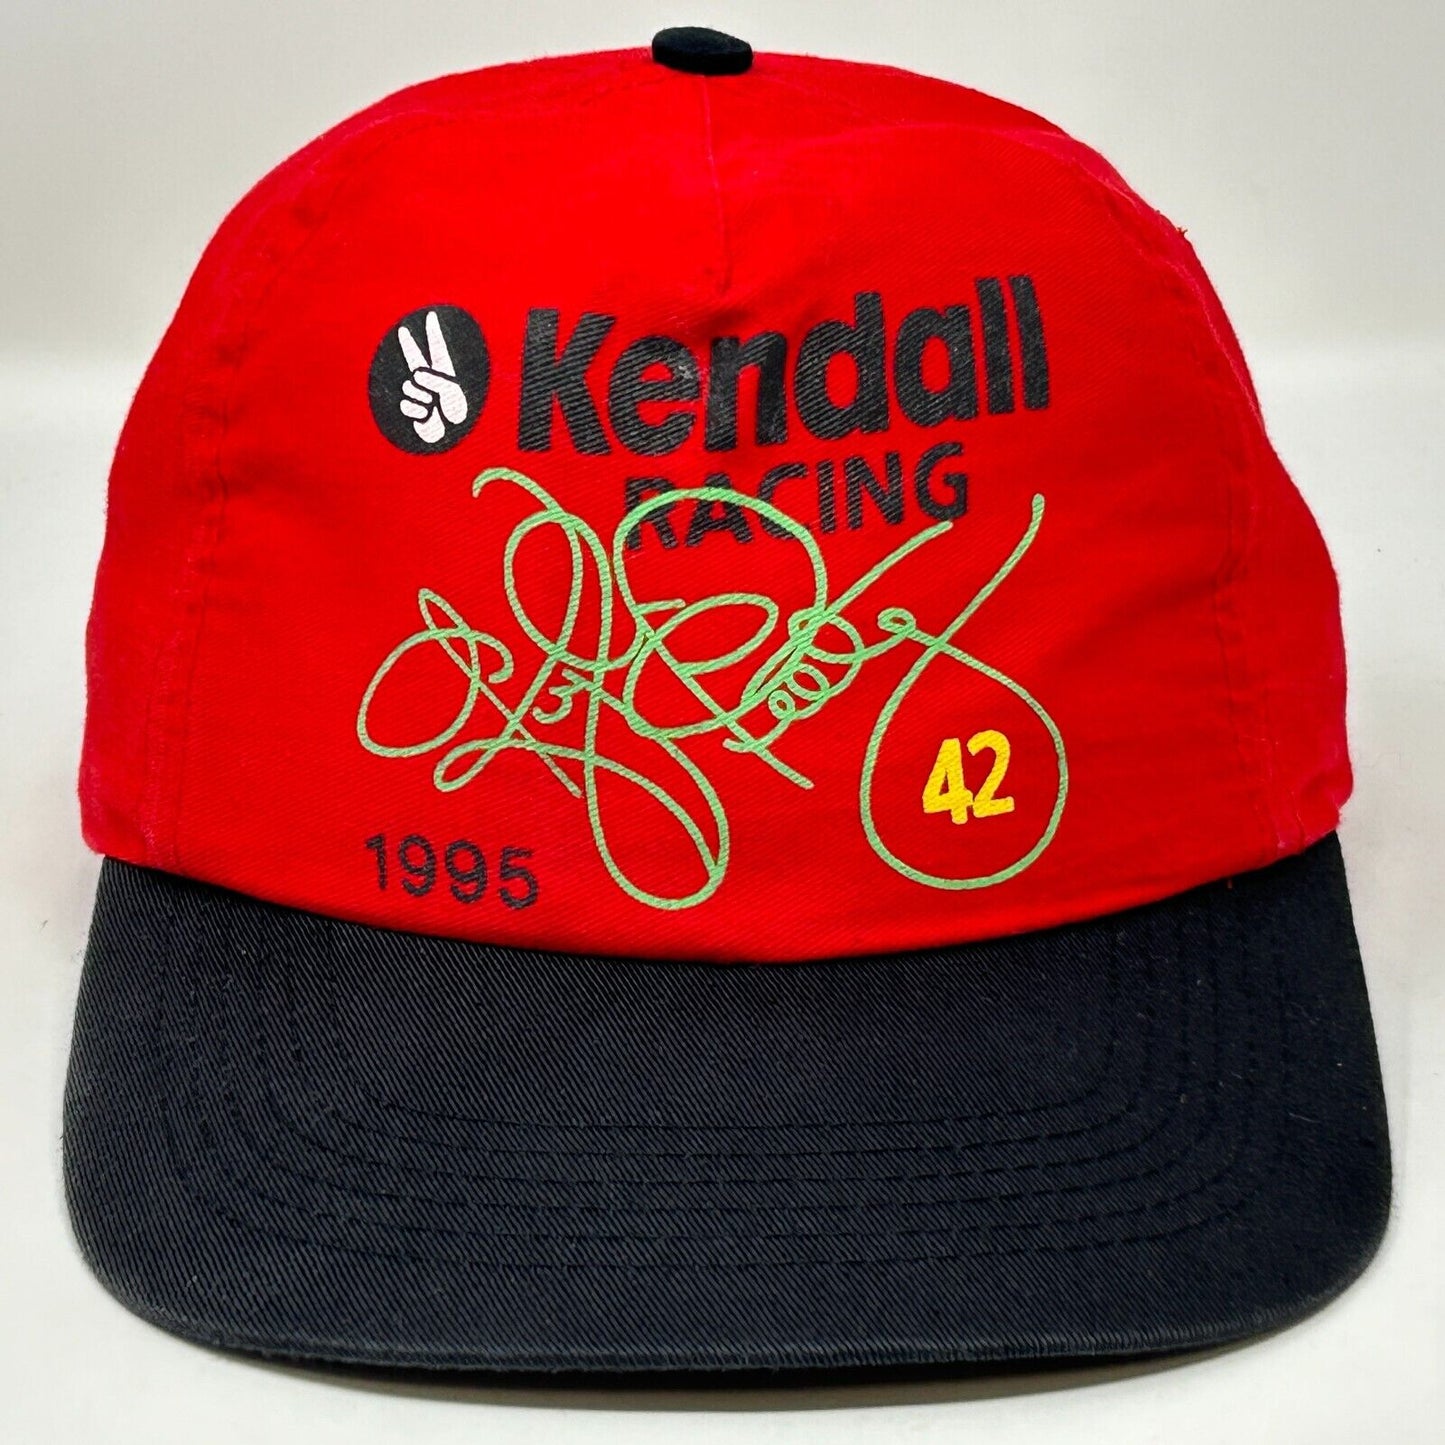 Kyle Petty Kendall Racing 1995 Hat Vintage 90s NASCAR Red Snapback Baseball Cap